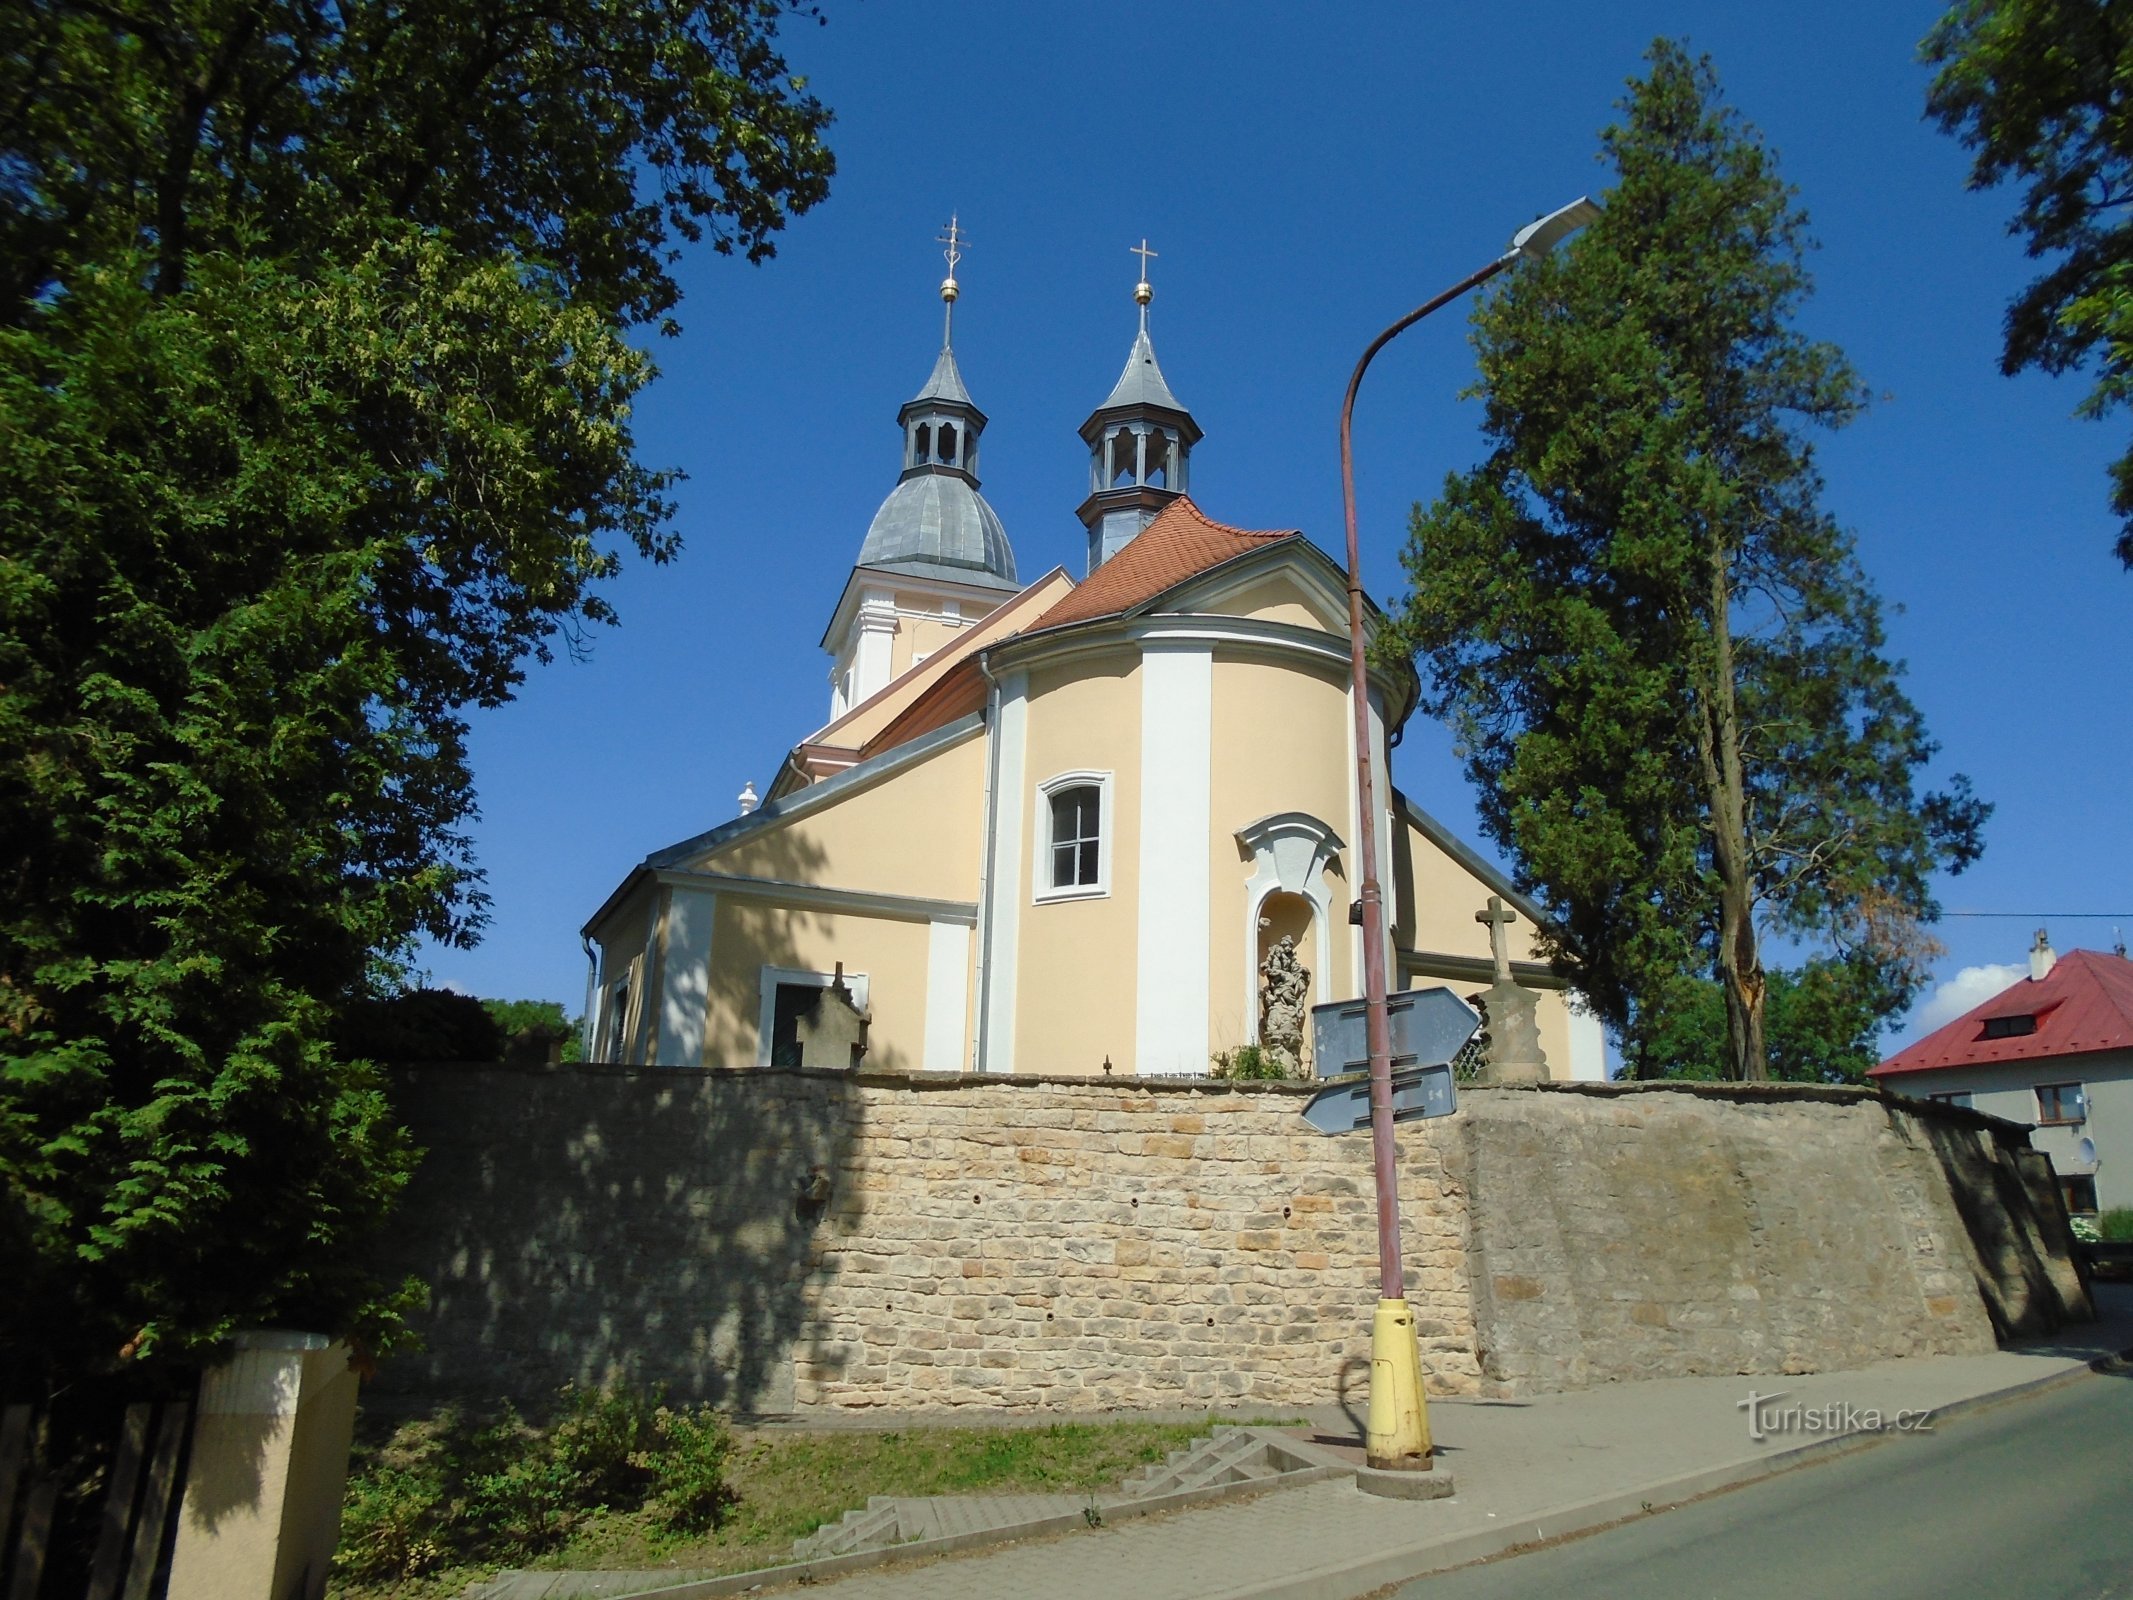 Church of the Assumption of the Virgin Mary (Nědelíště)